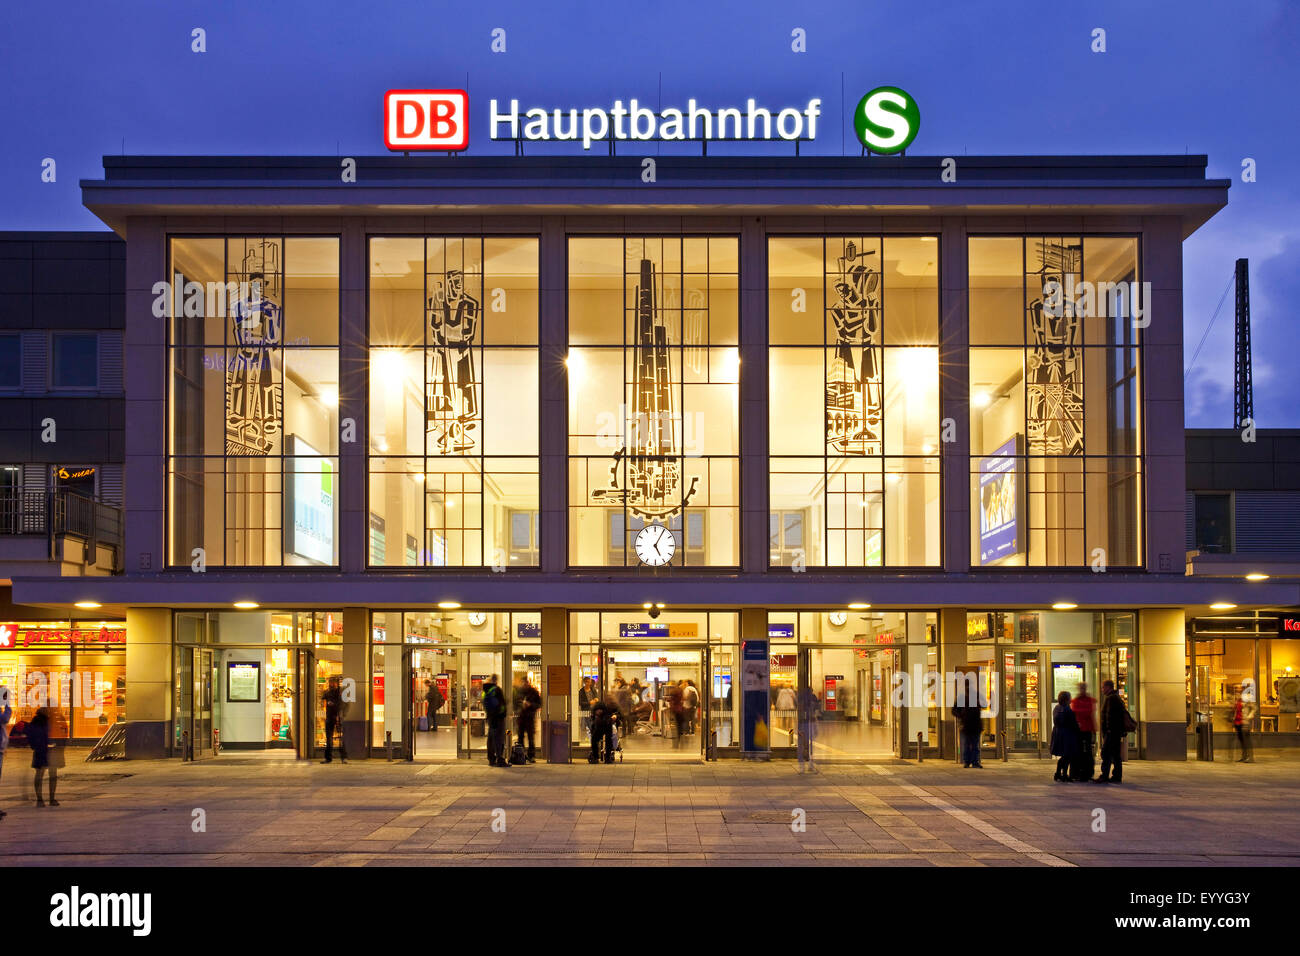 Dortmund hauptbahnhof hi-res stock photography and images - Alamy